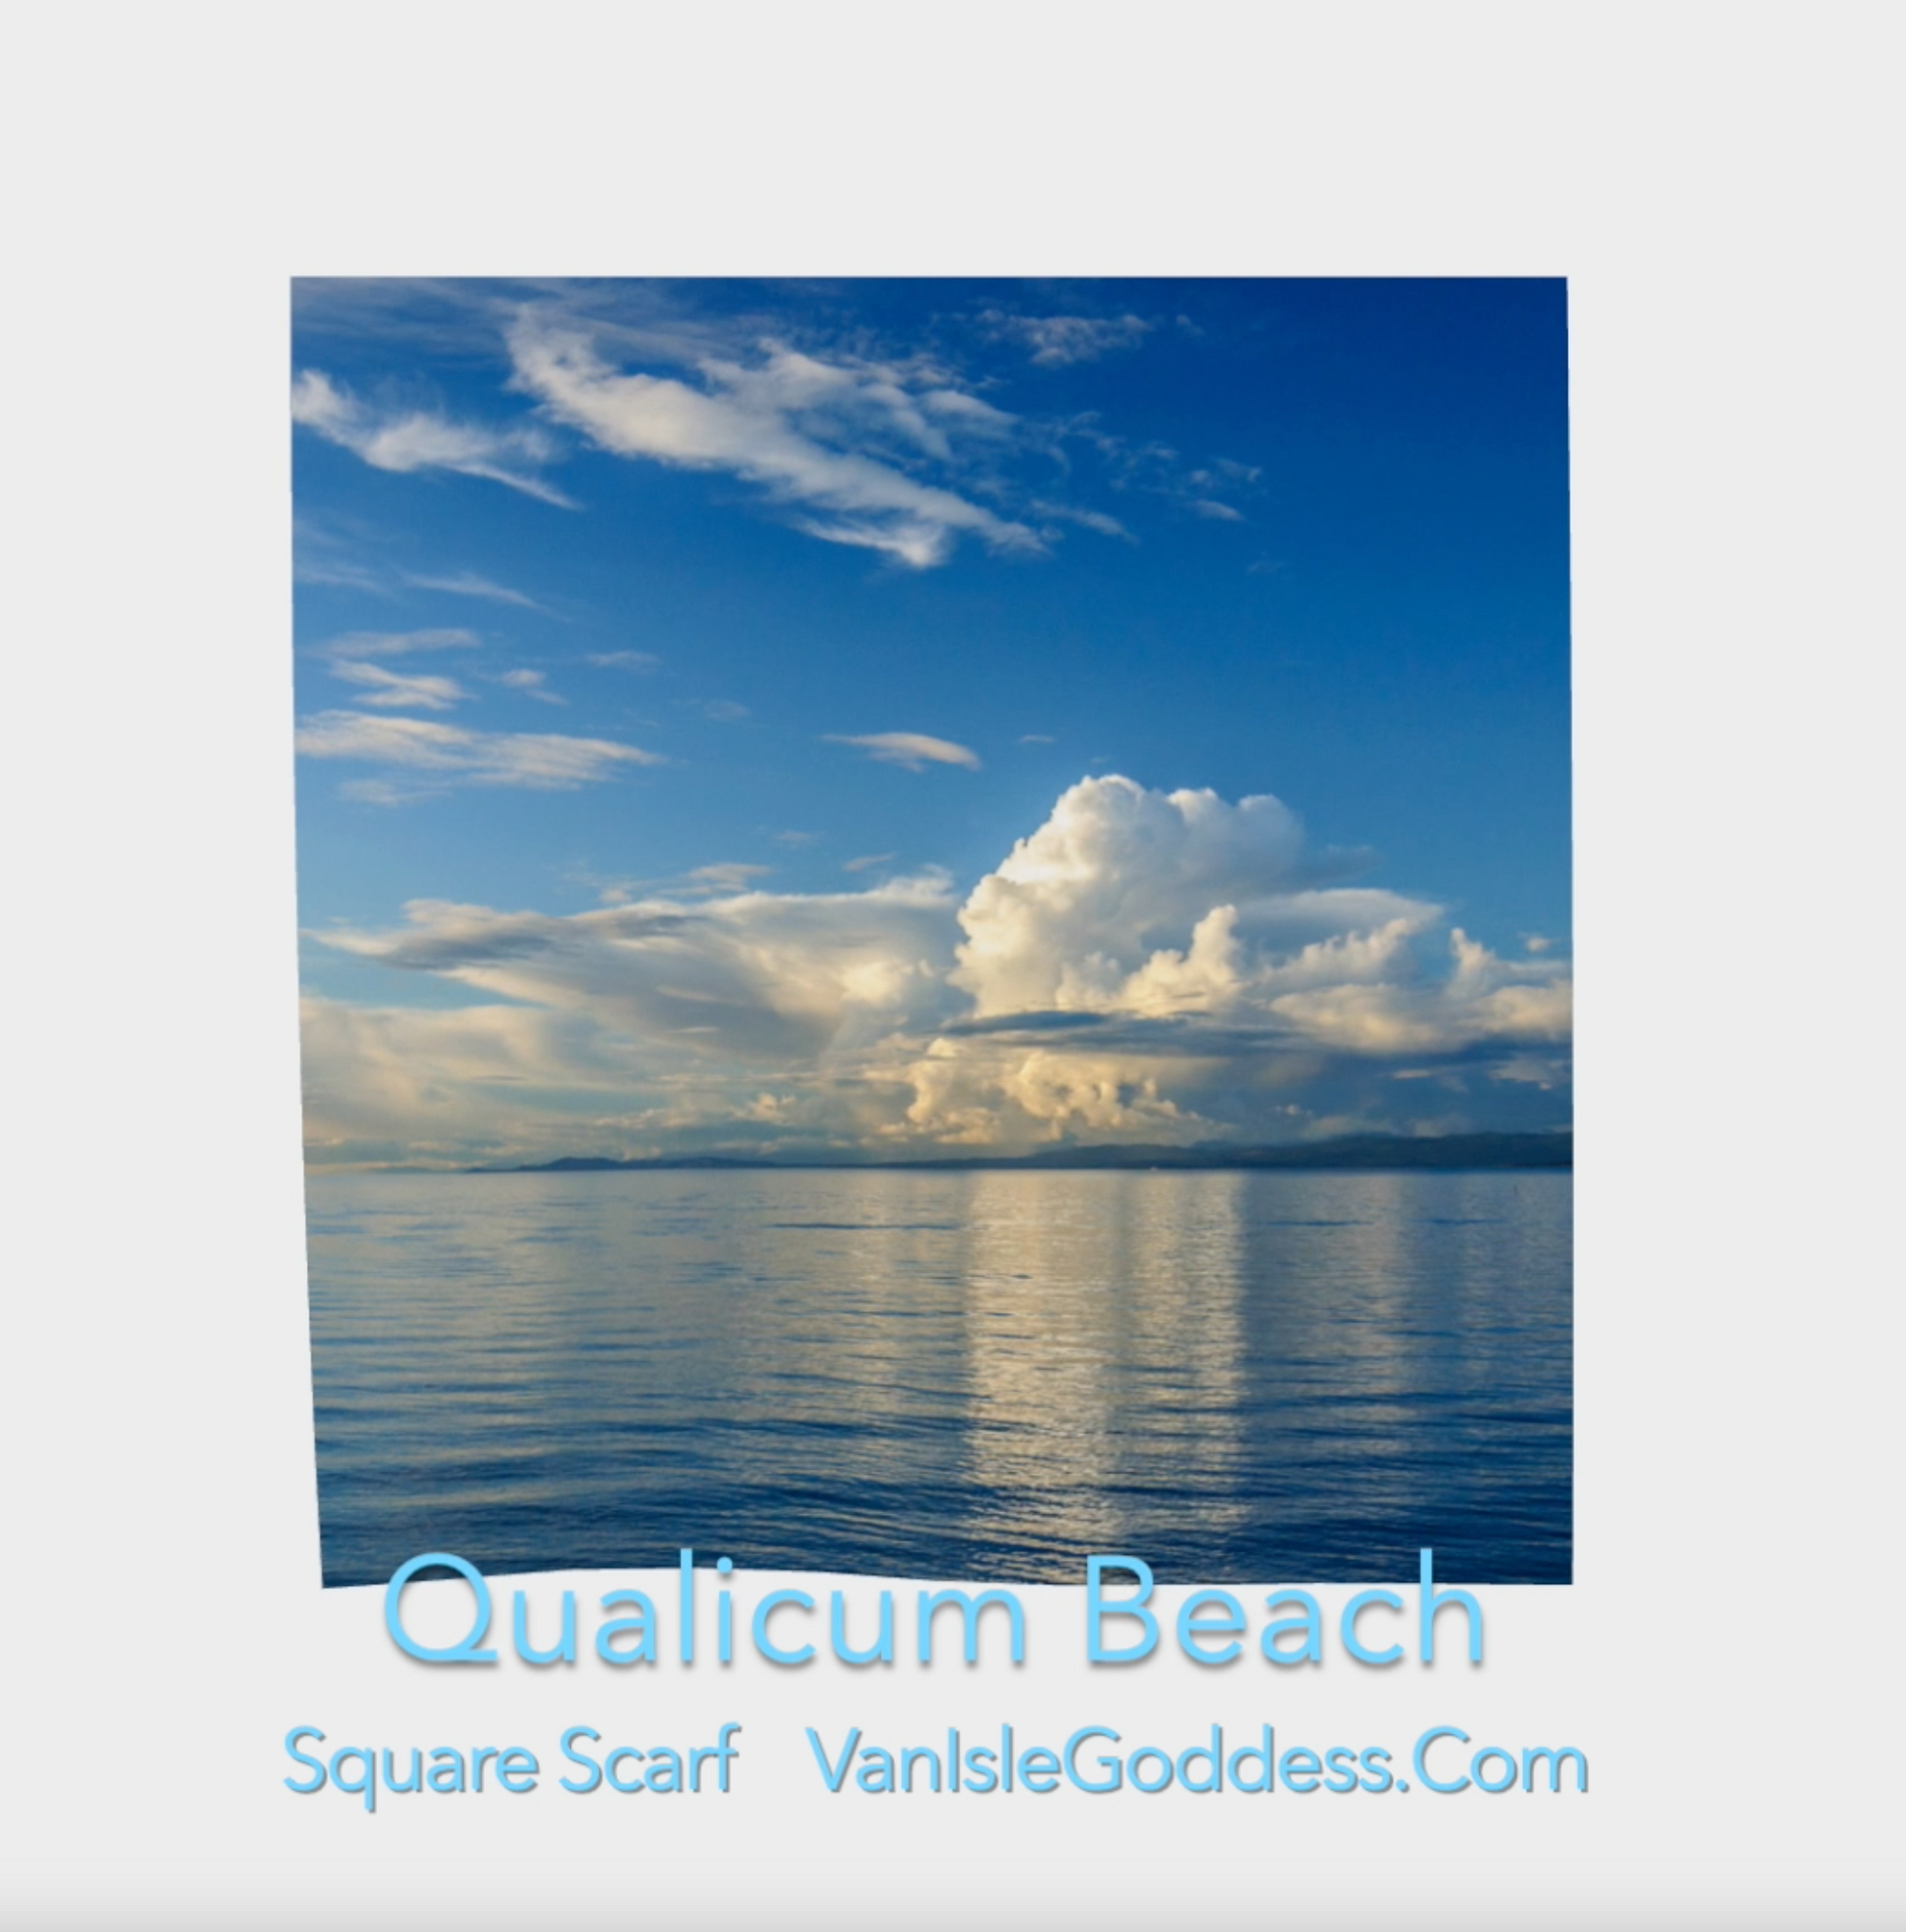 Qualicum Beach square scarf shown full size